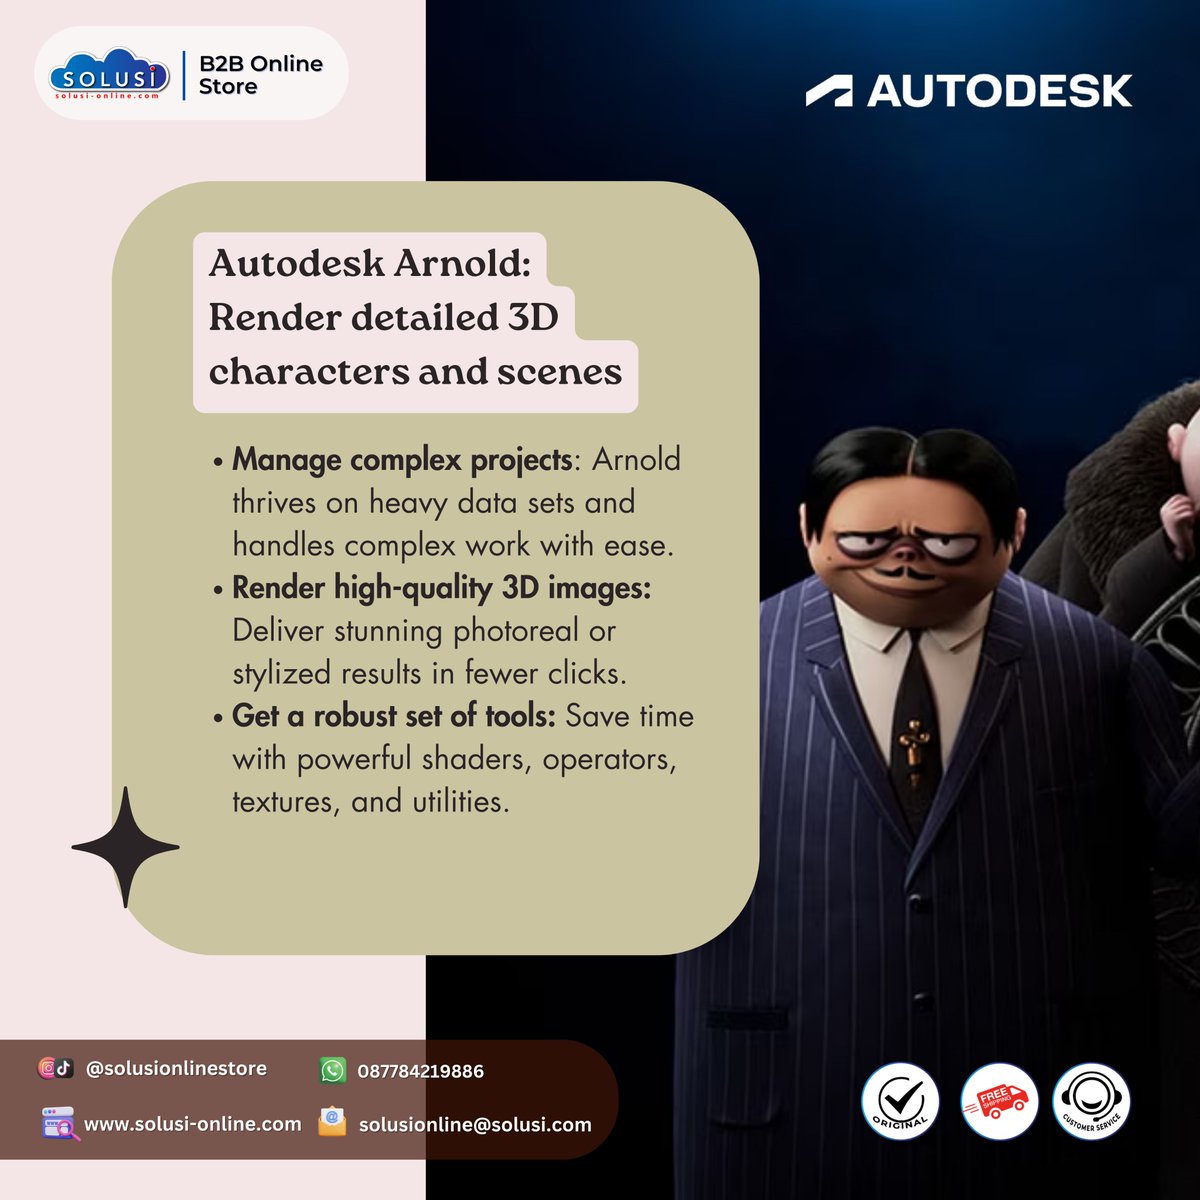 Unlock the power of creativity with Autodesk Arnold - where precision meets beauty. 🎨✨

solusi-online.com/product/autode…

#AutodeskArnold #RenderMagic #CreativeJourney #Murah #Diskon #License #Software #SolusiOnlineStore #B2BOnlineStore